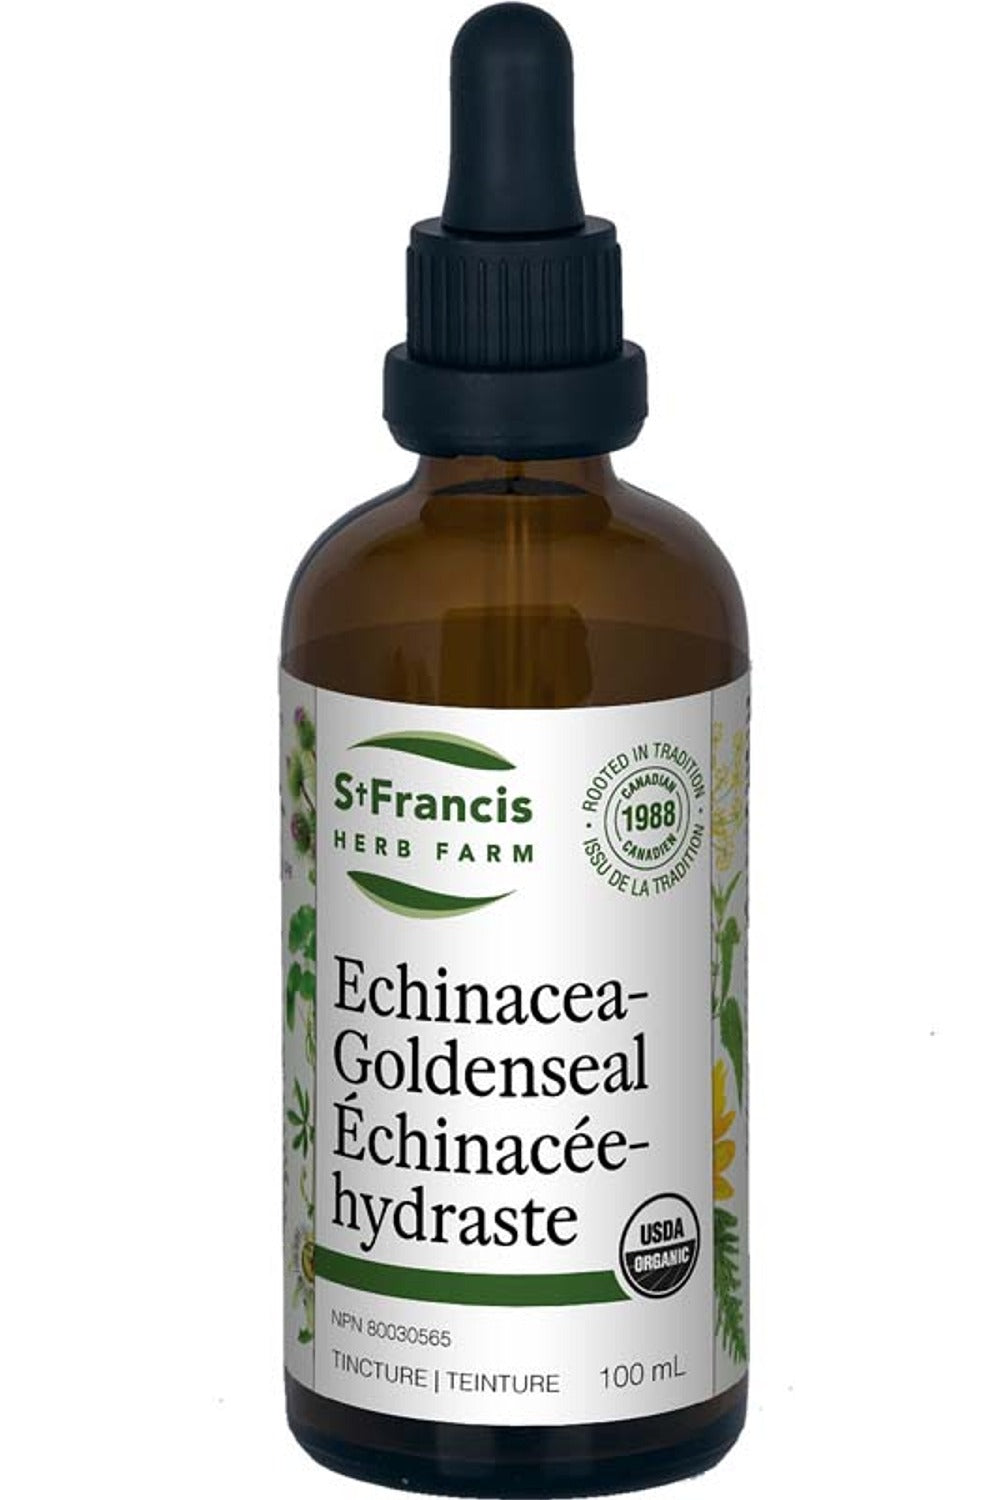 ST FRANCIS HERB FARM Echinacea Goldenseal (100 ml)